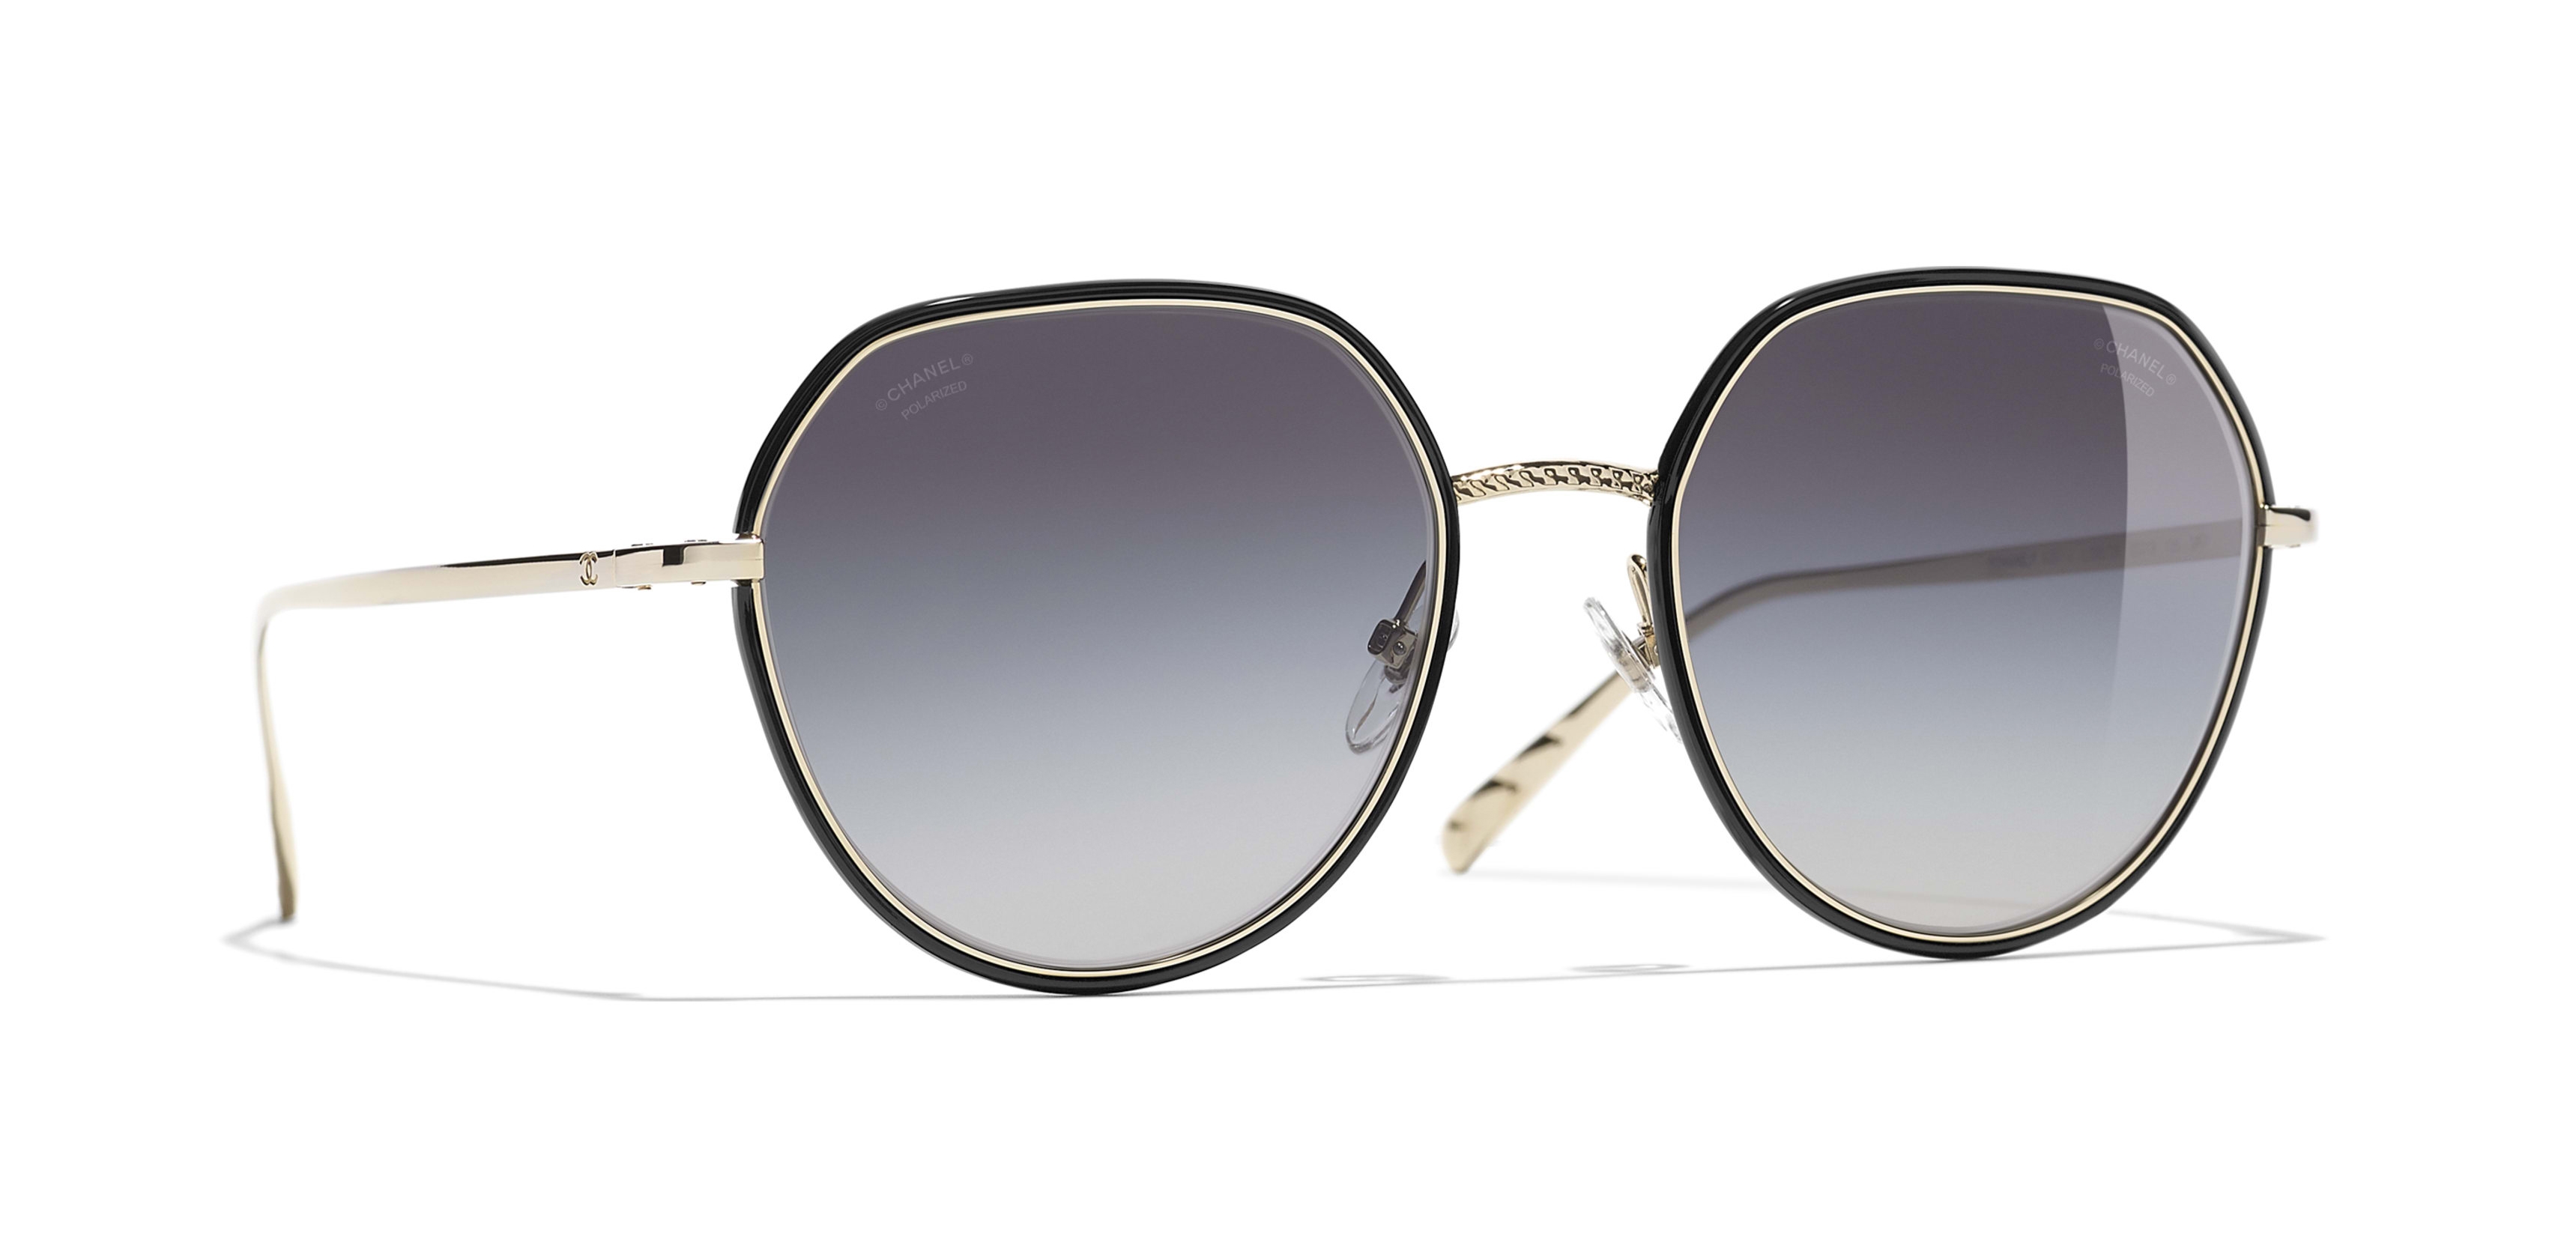 Chanel - Round Sunglasses - Gold Black Gray - Chanel Eyewear - Avvenice